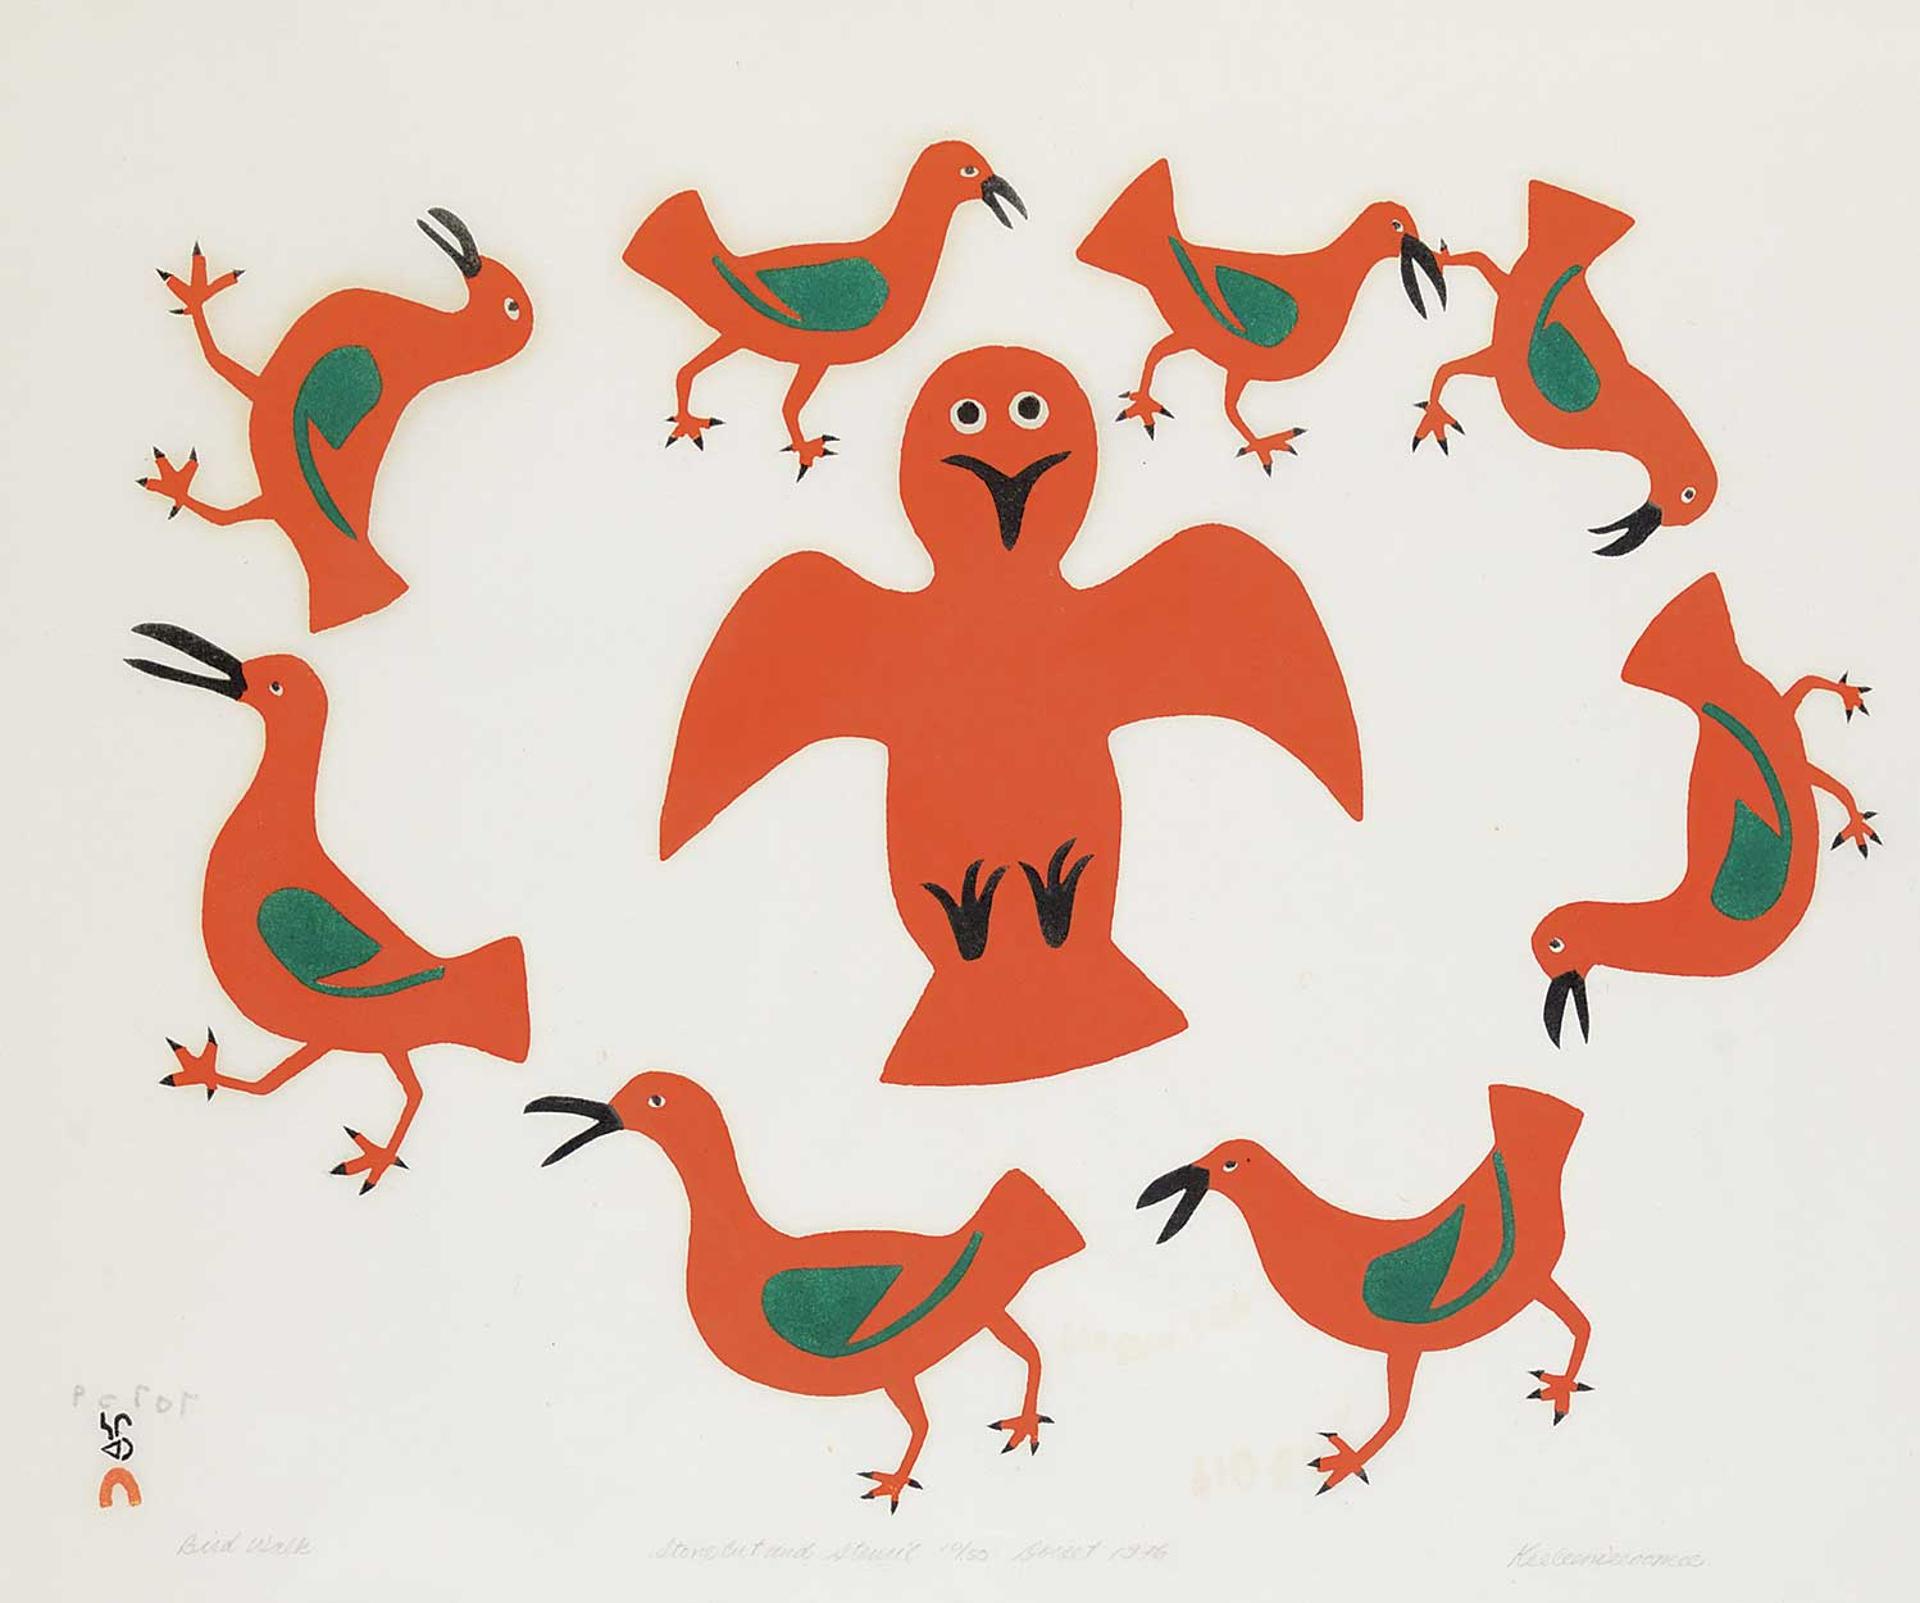 Keeleemeeoomee Samualie (1919-1983) - Bird Walk  #10/50